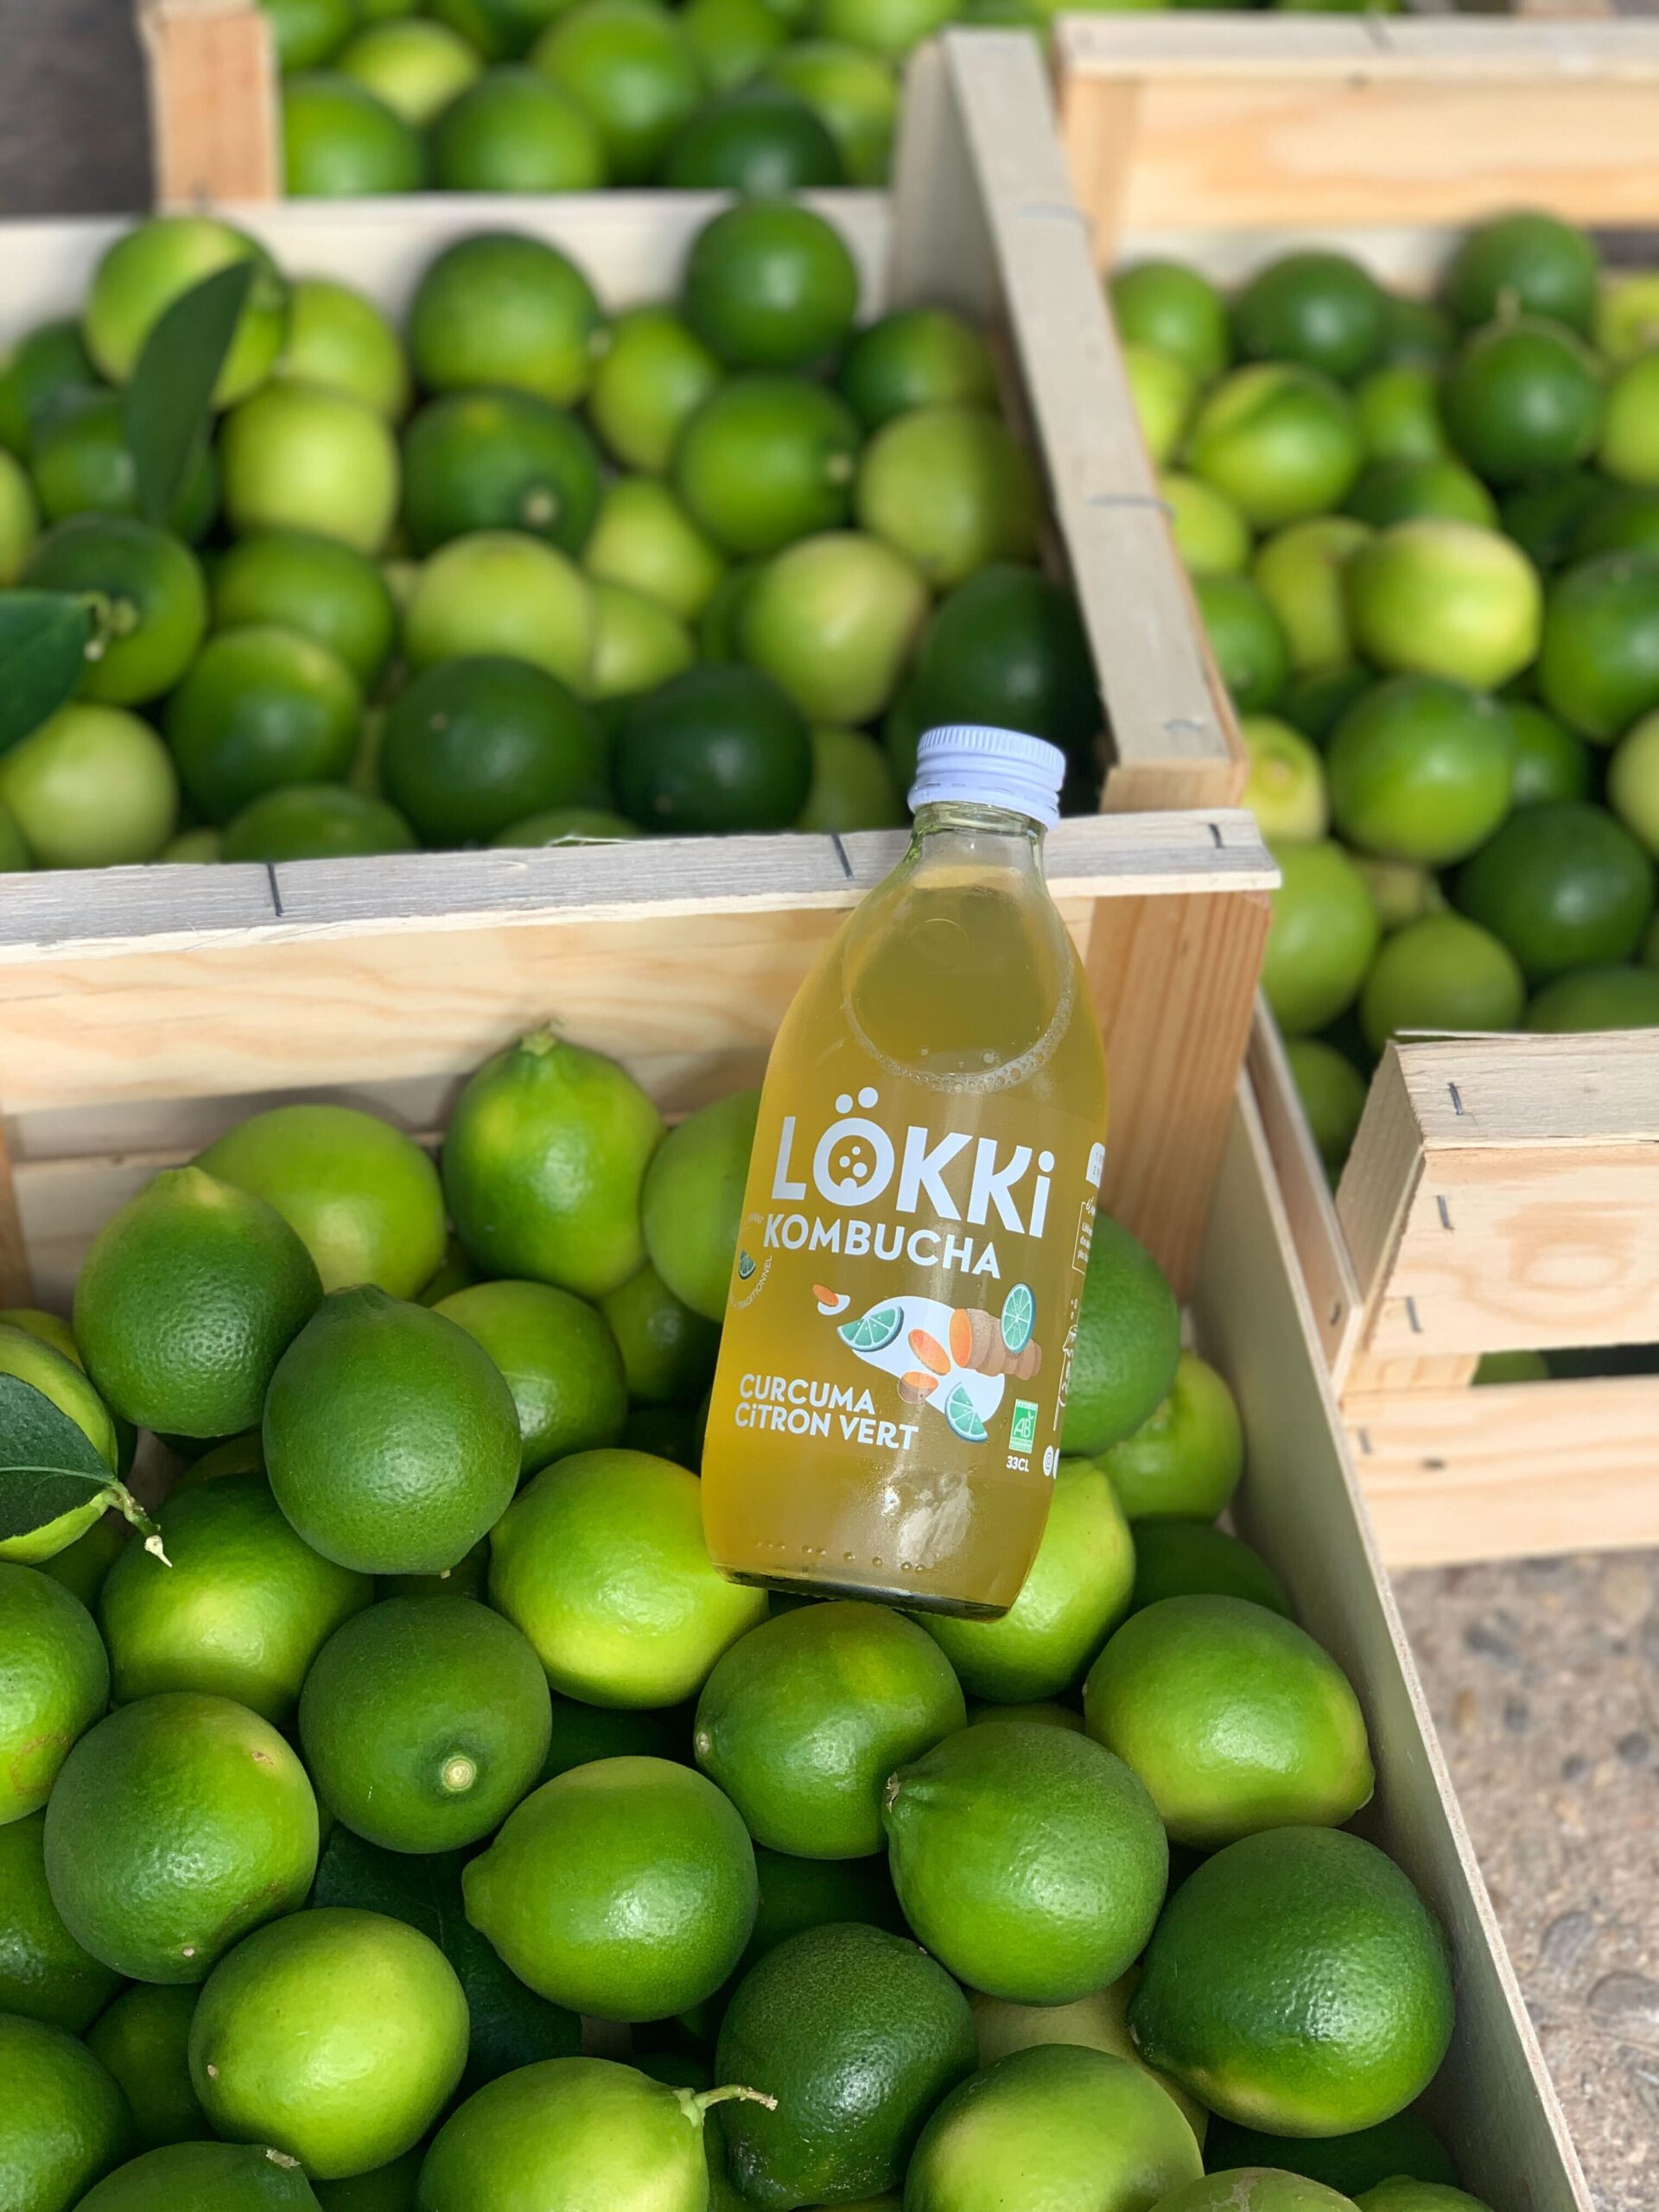 Matière première fraîche de notre kombucha Curcuma Citron vert Lökki